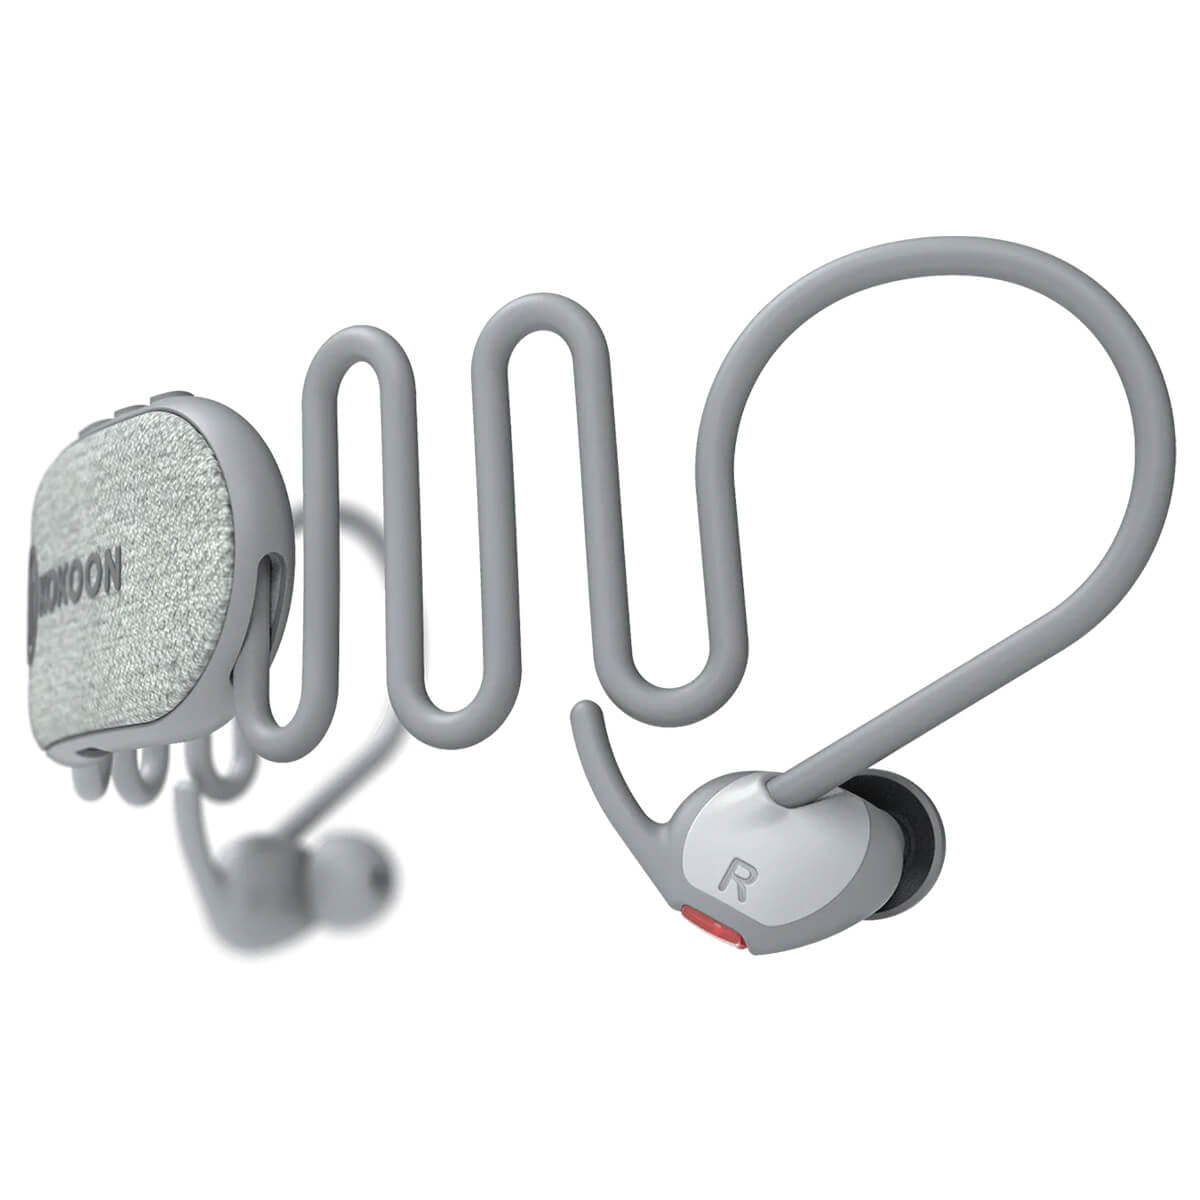 Kokoon Nightbuds headphones for sleeping